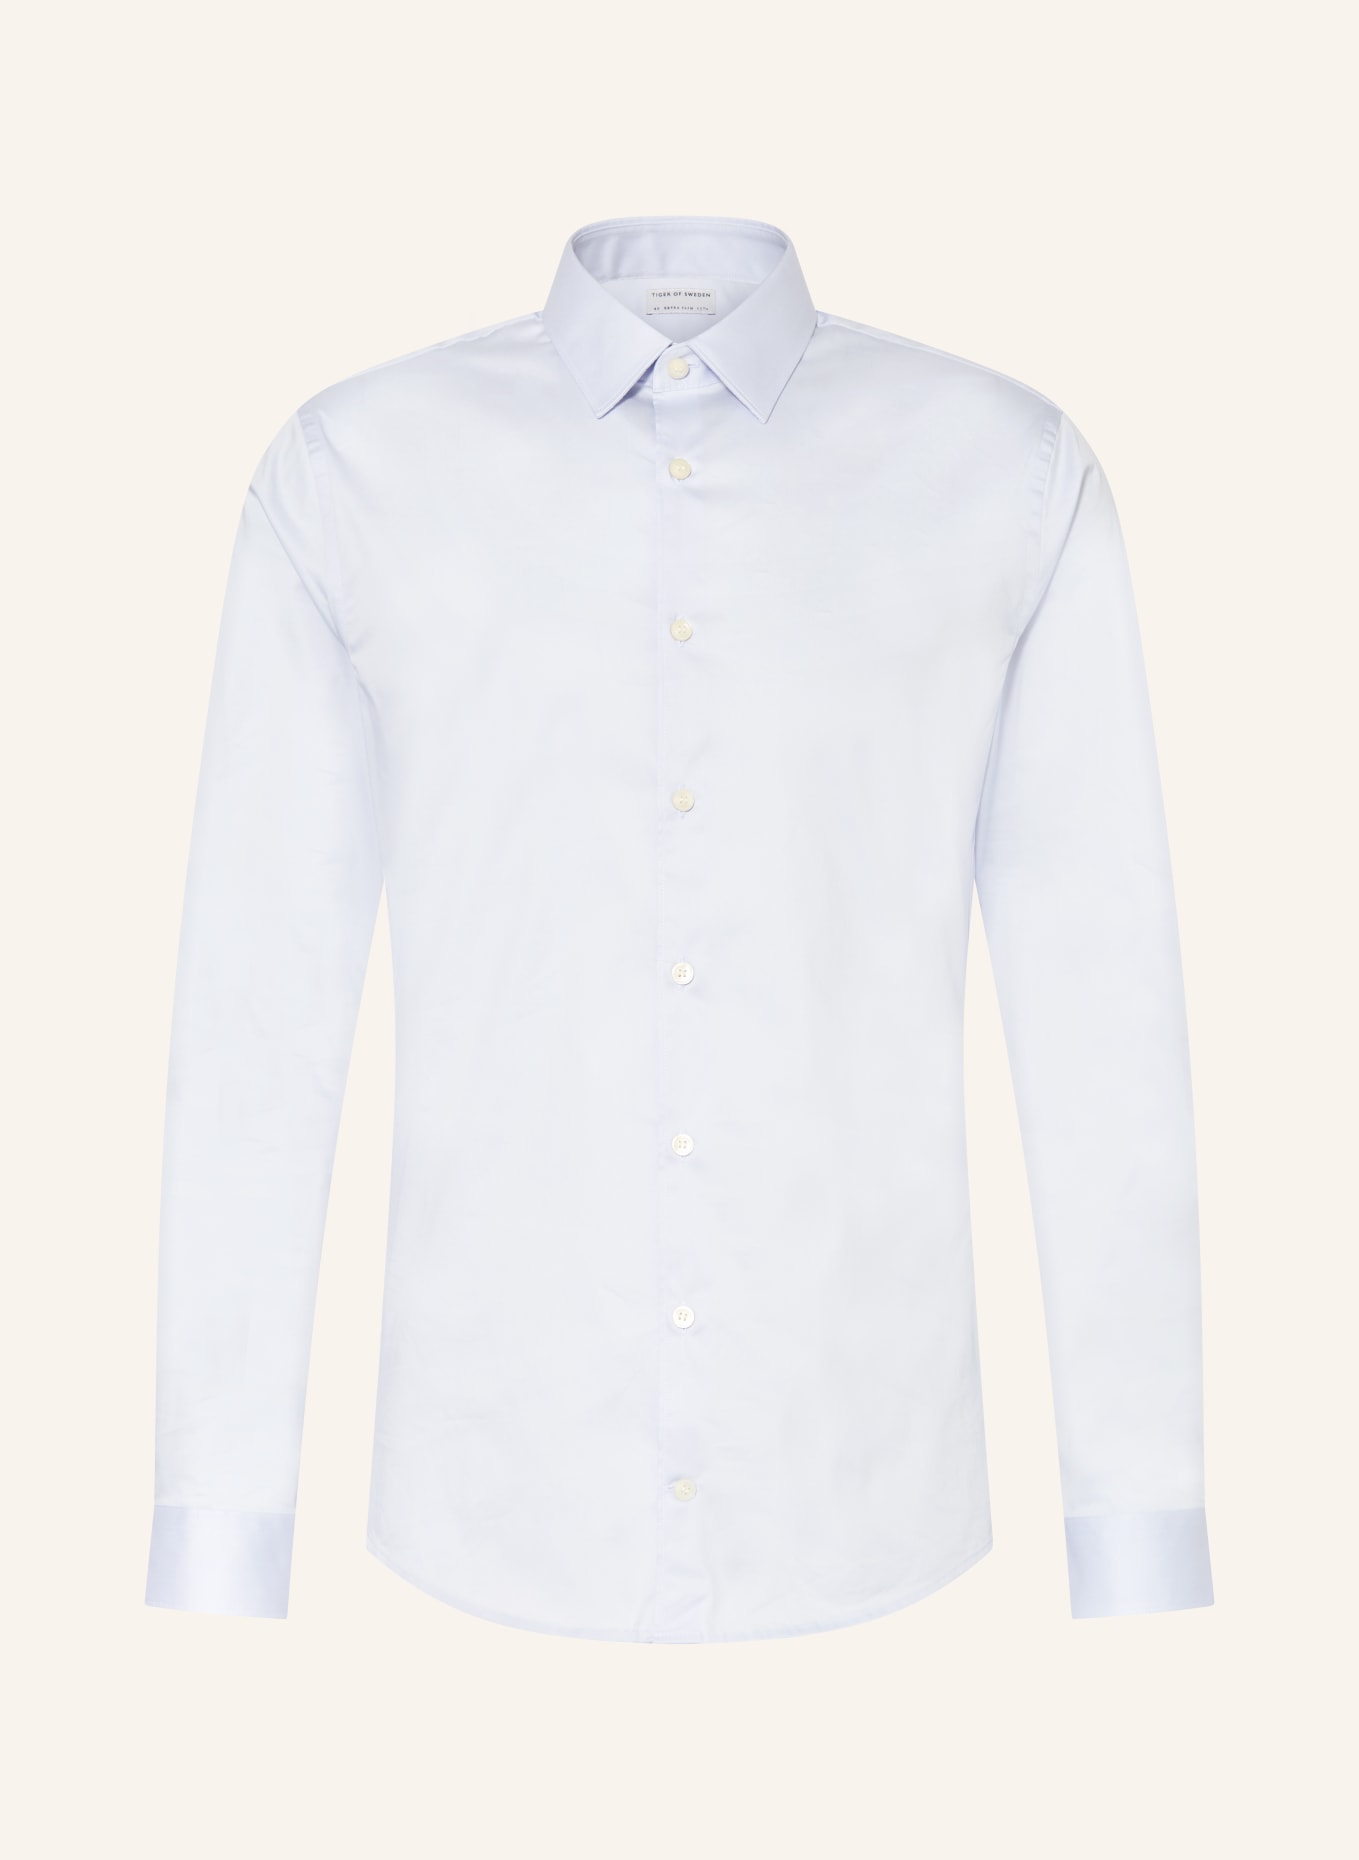 TIGER OF SWEDEN Hemd FILBRODIE Extra Slim Fit, Farbe: HELLBLAU (Bild 1)